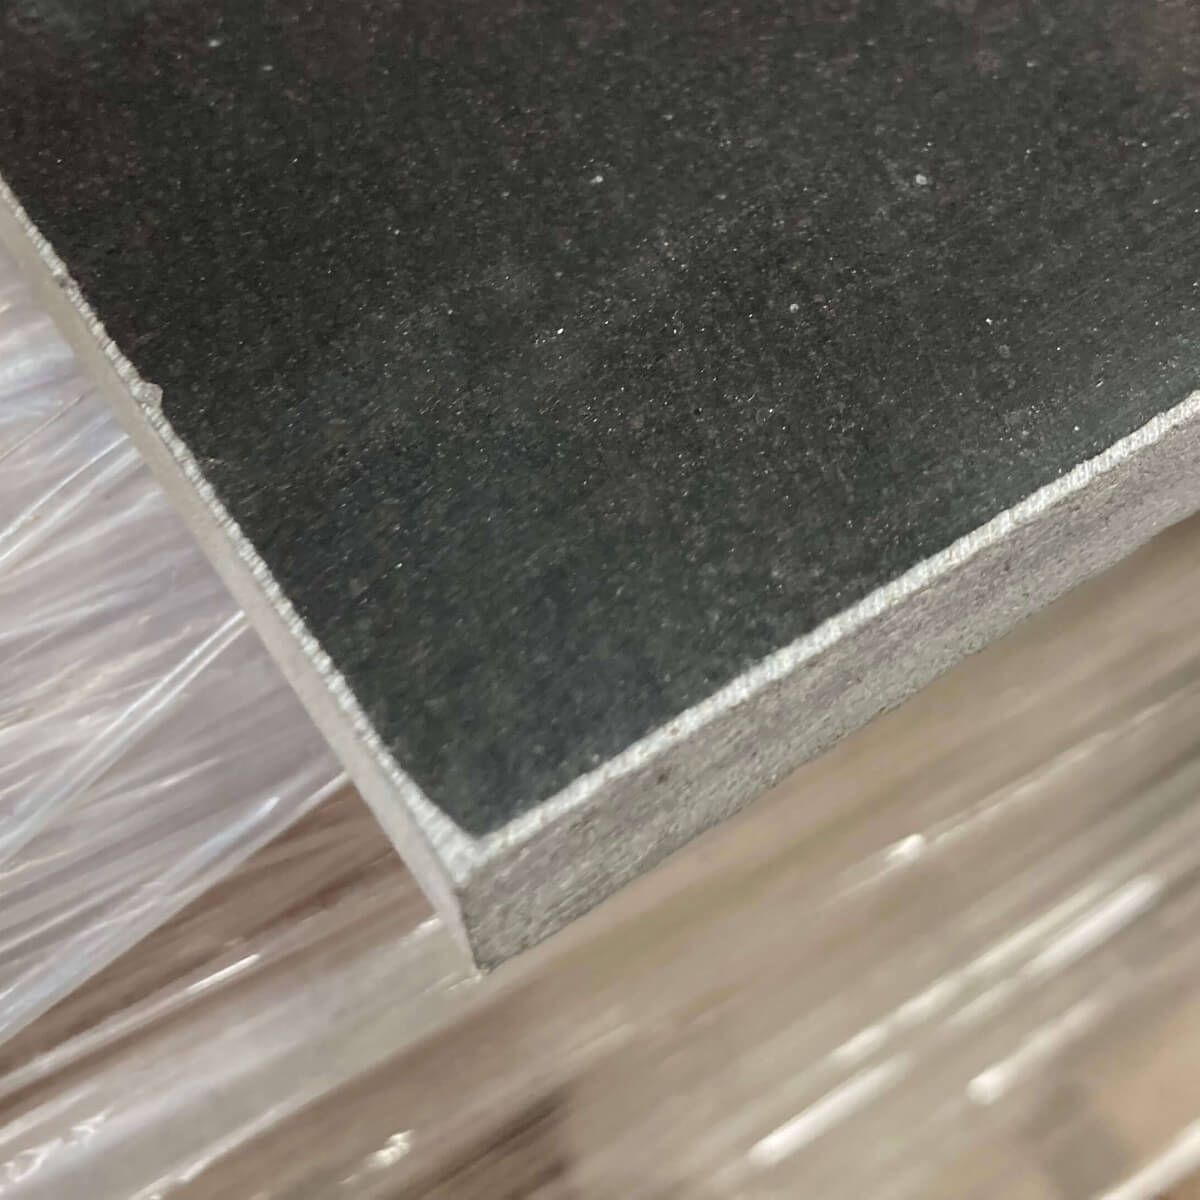 Płytki Granit Absolute Black polerowane 60x60x1 cm (34,56 m2)